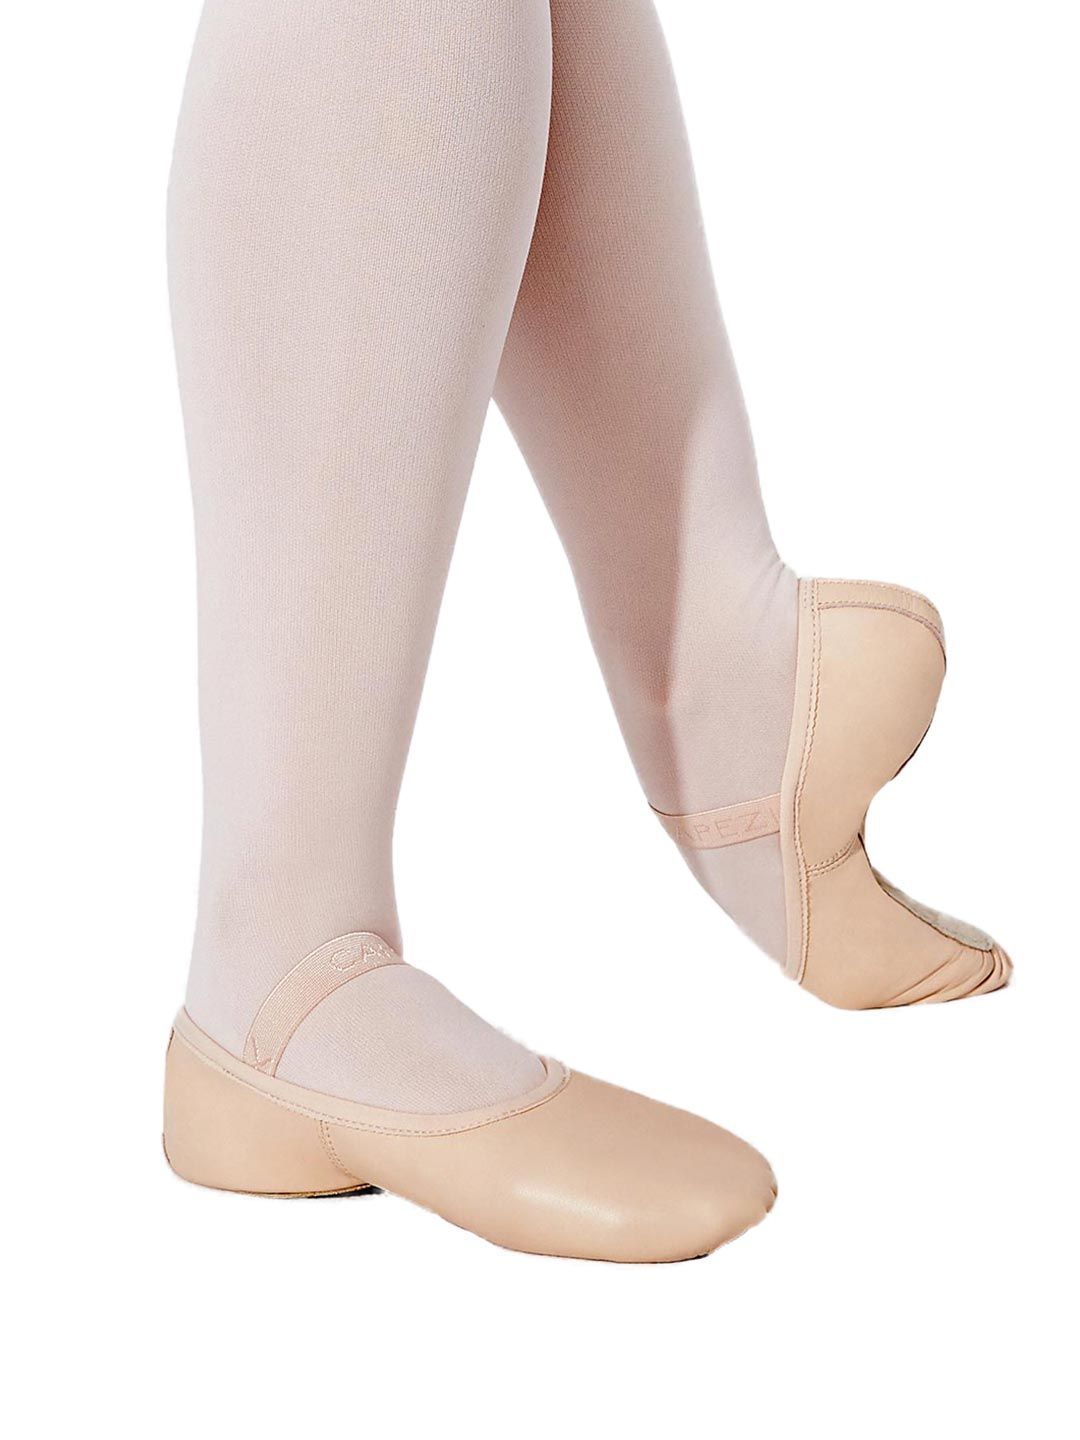 Capezio — Lily — Ballet Shoes — Hummelstown, PA — The Dancer's Pointe